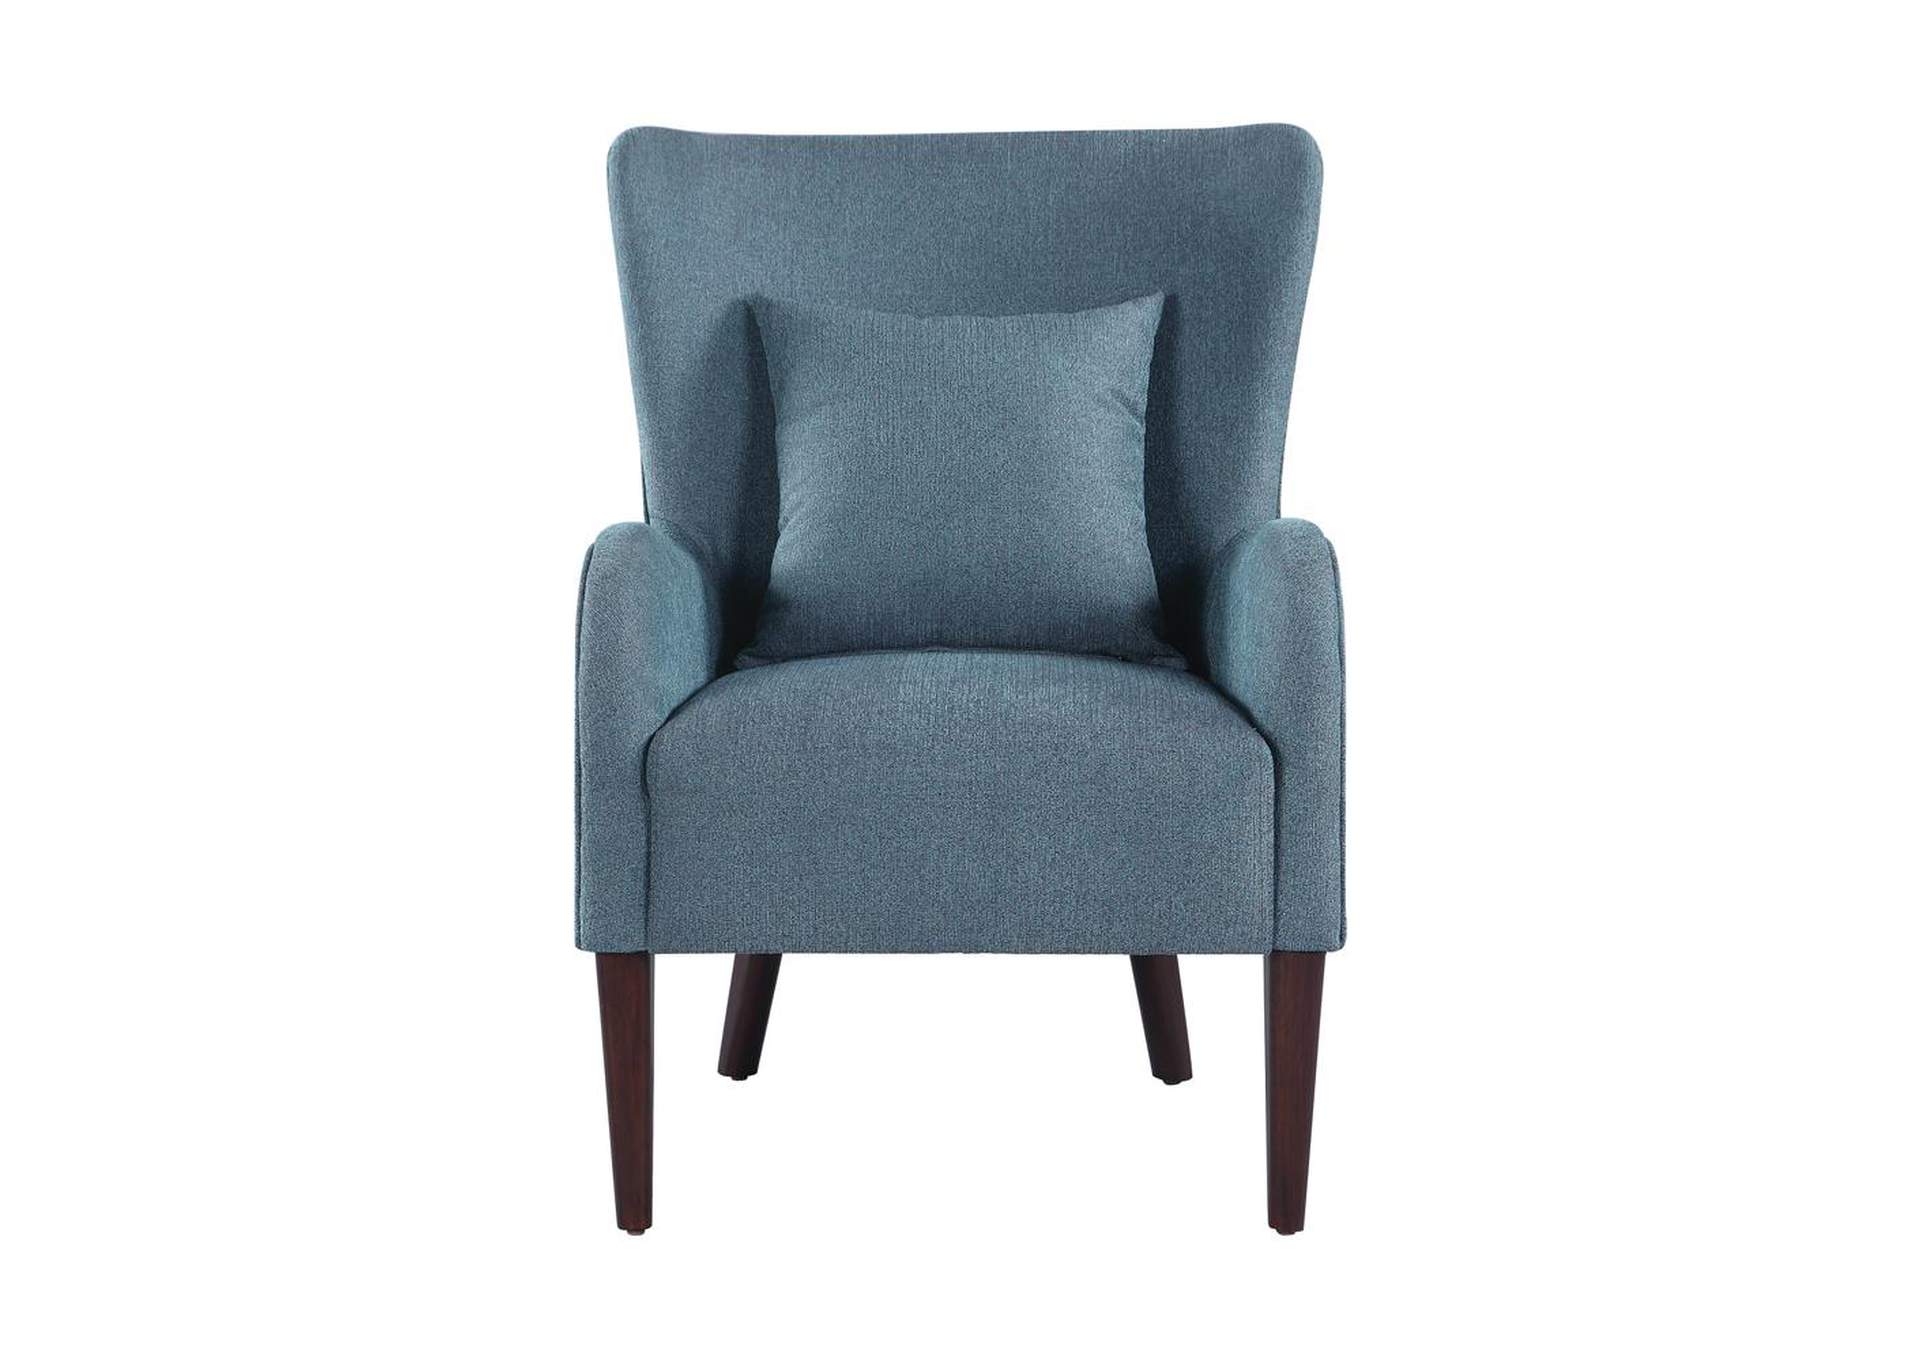 Blue Accent Chair,Coaster Furniture